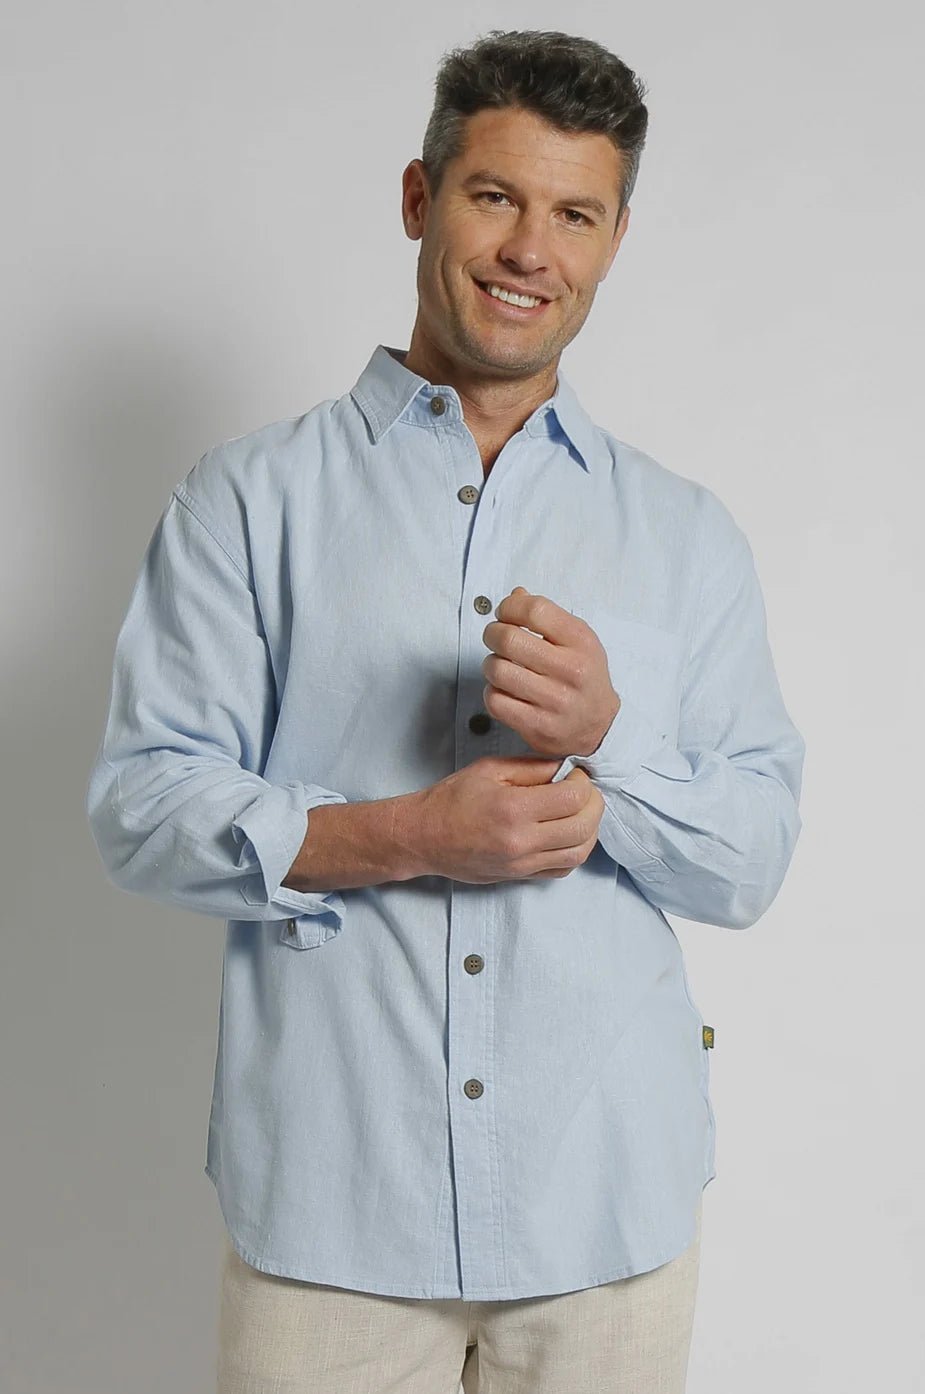 S12 Men's Hemp Rayon Shirt - Margaret River Hemp Co